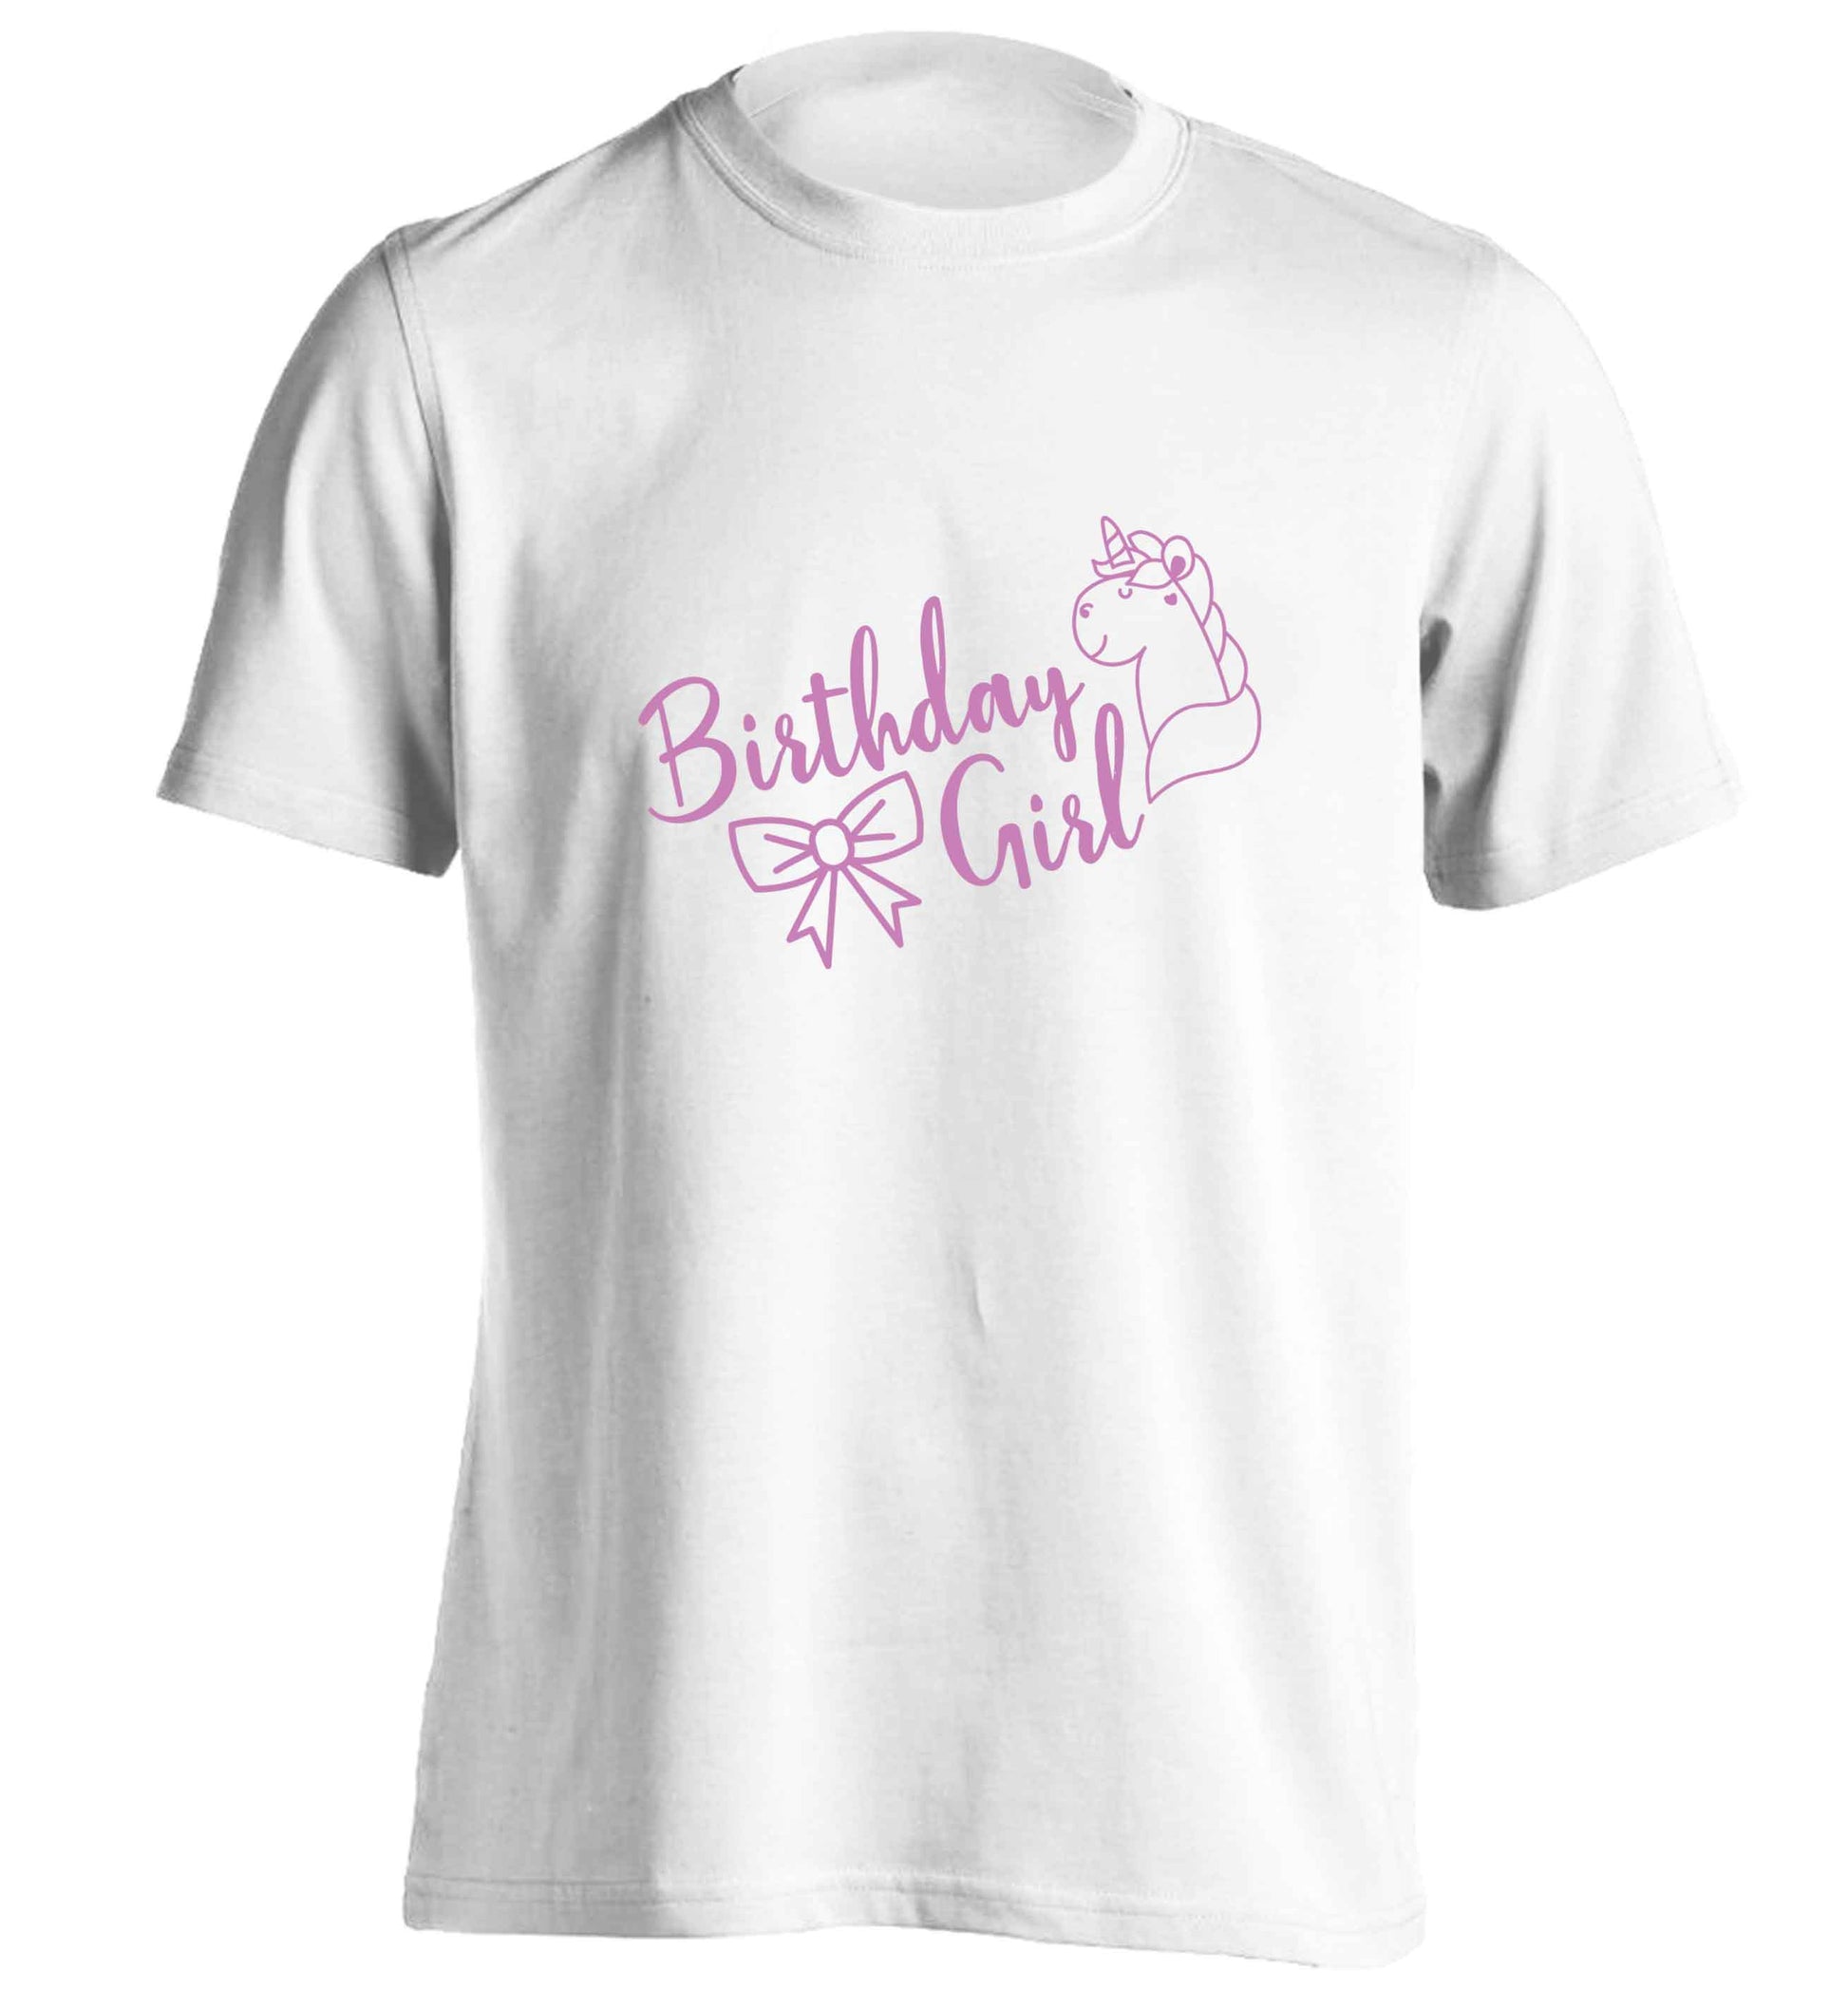 Birthday girl adults unisex white Tshirt 2XL